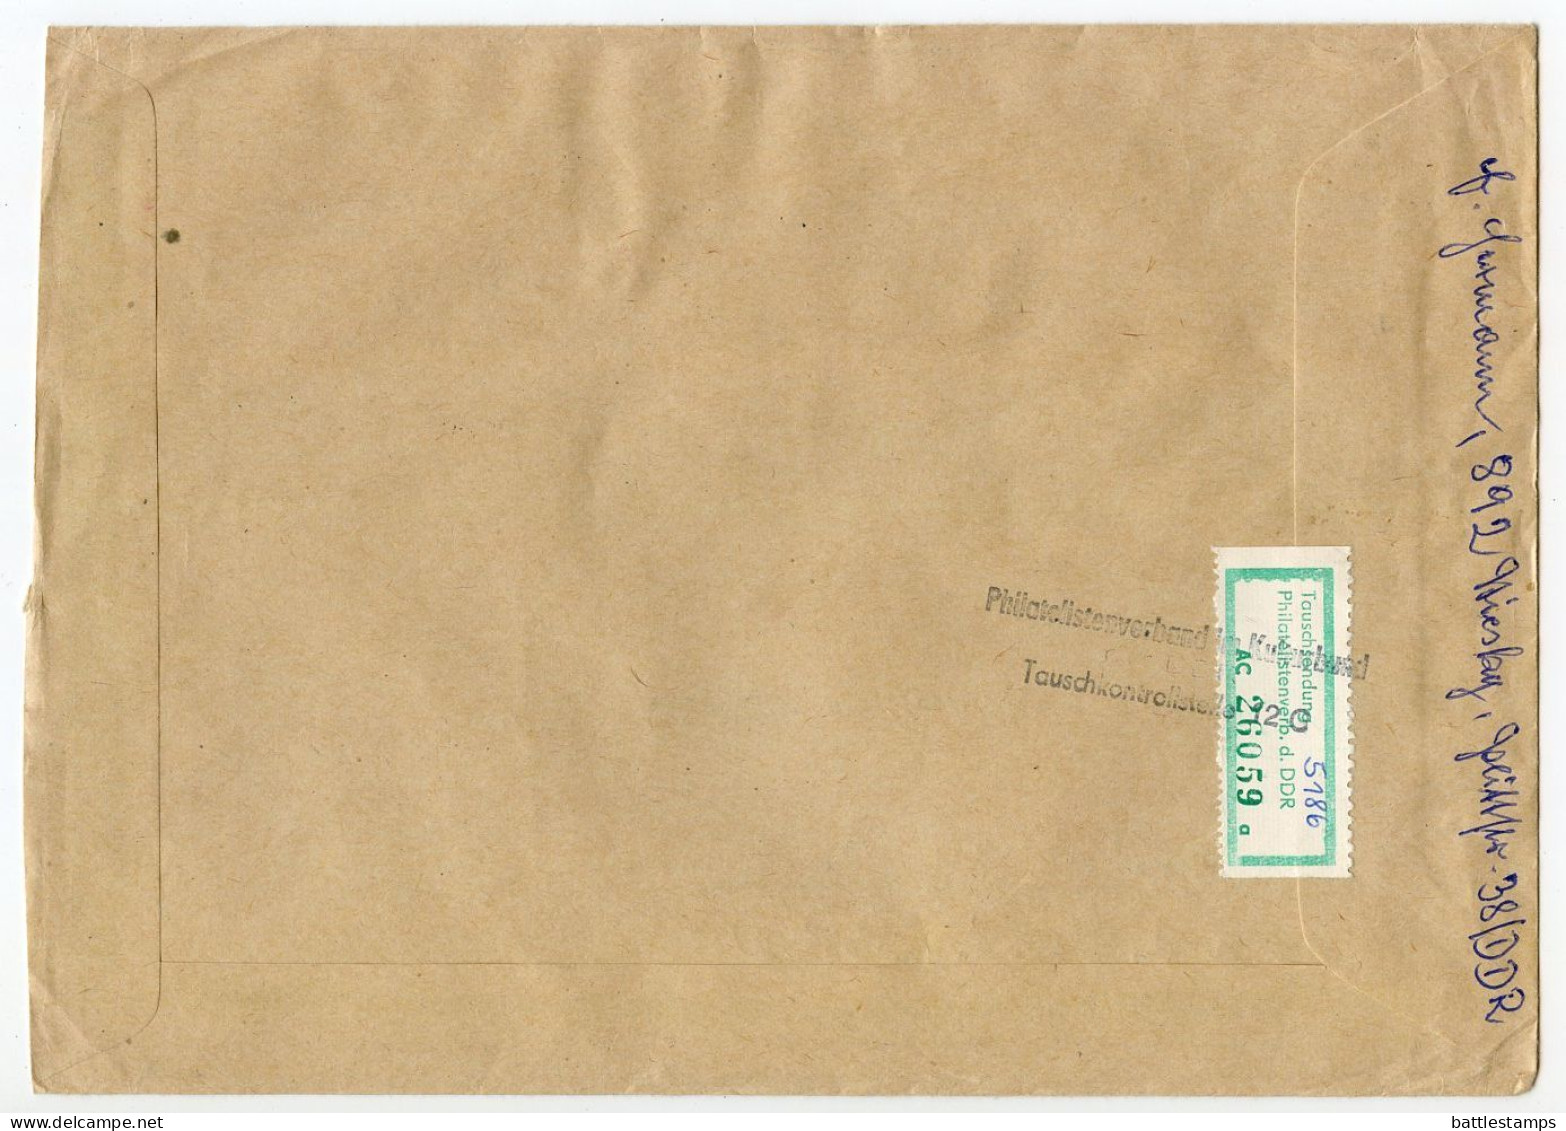 Germany East 1979 Registered Cover; Görlitz To Vienenburg; Circus & Other Stamps; Tauschsendung (Exchange Control) Label - Storia Postale